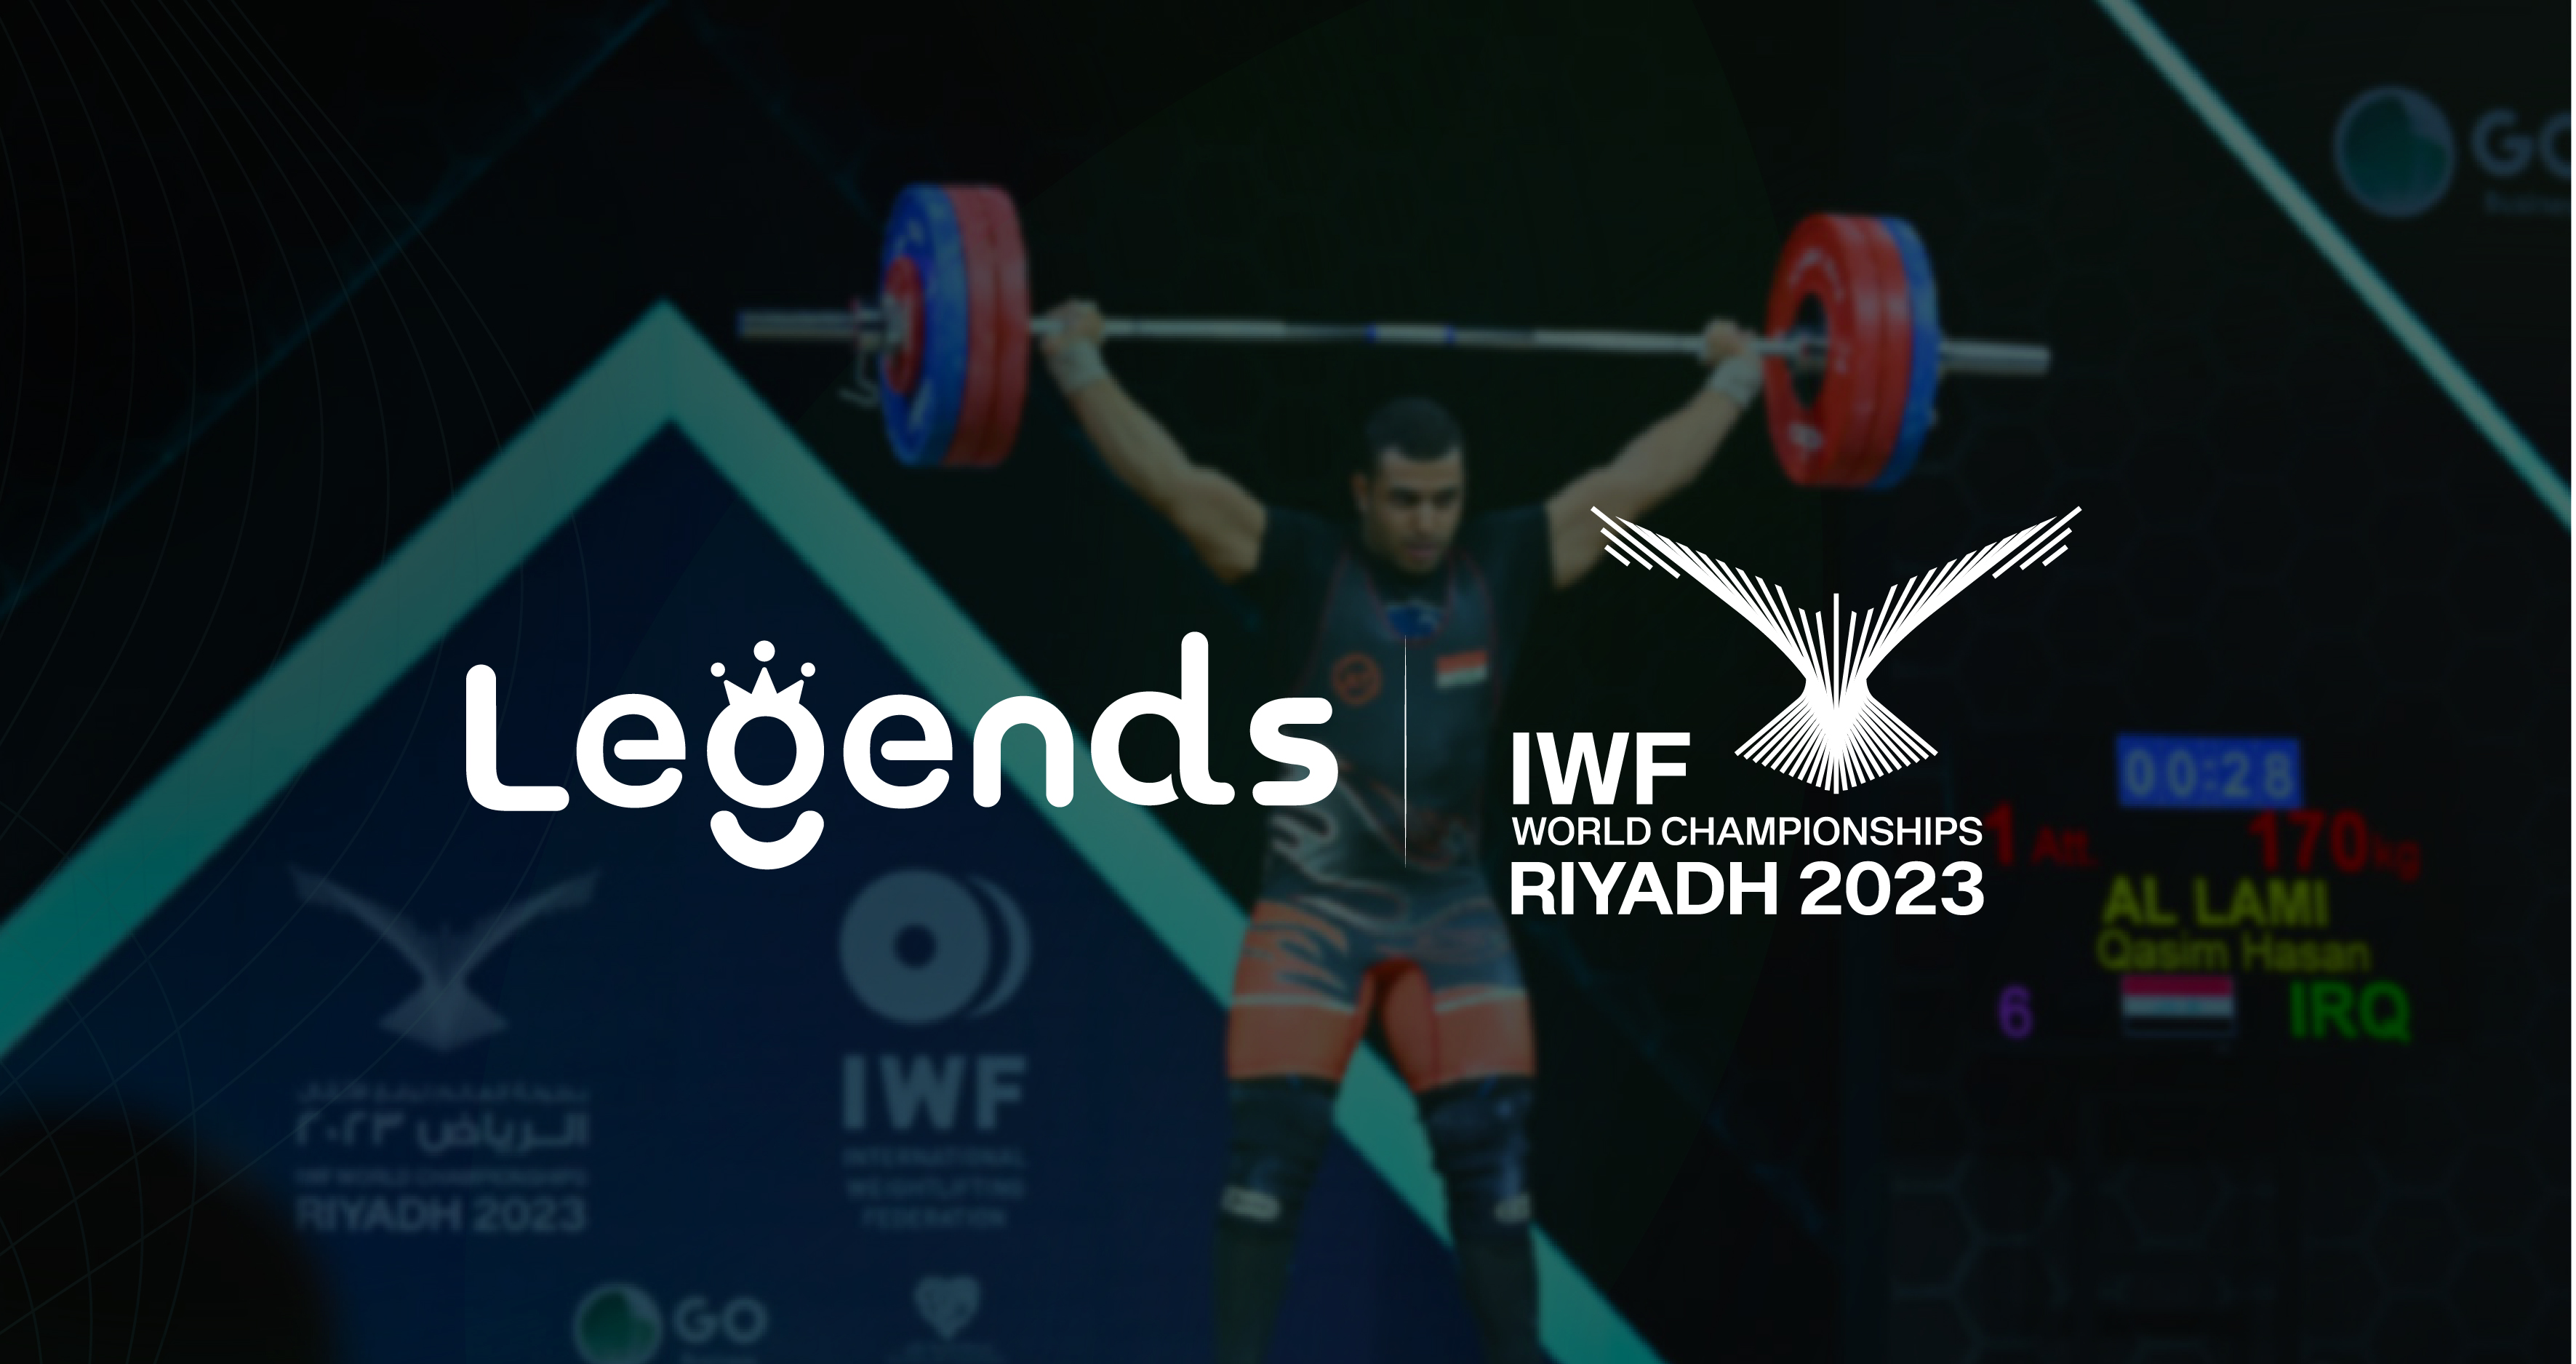 Legends notches up success with Riyadh’s IWF World Weightlifting